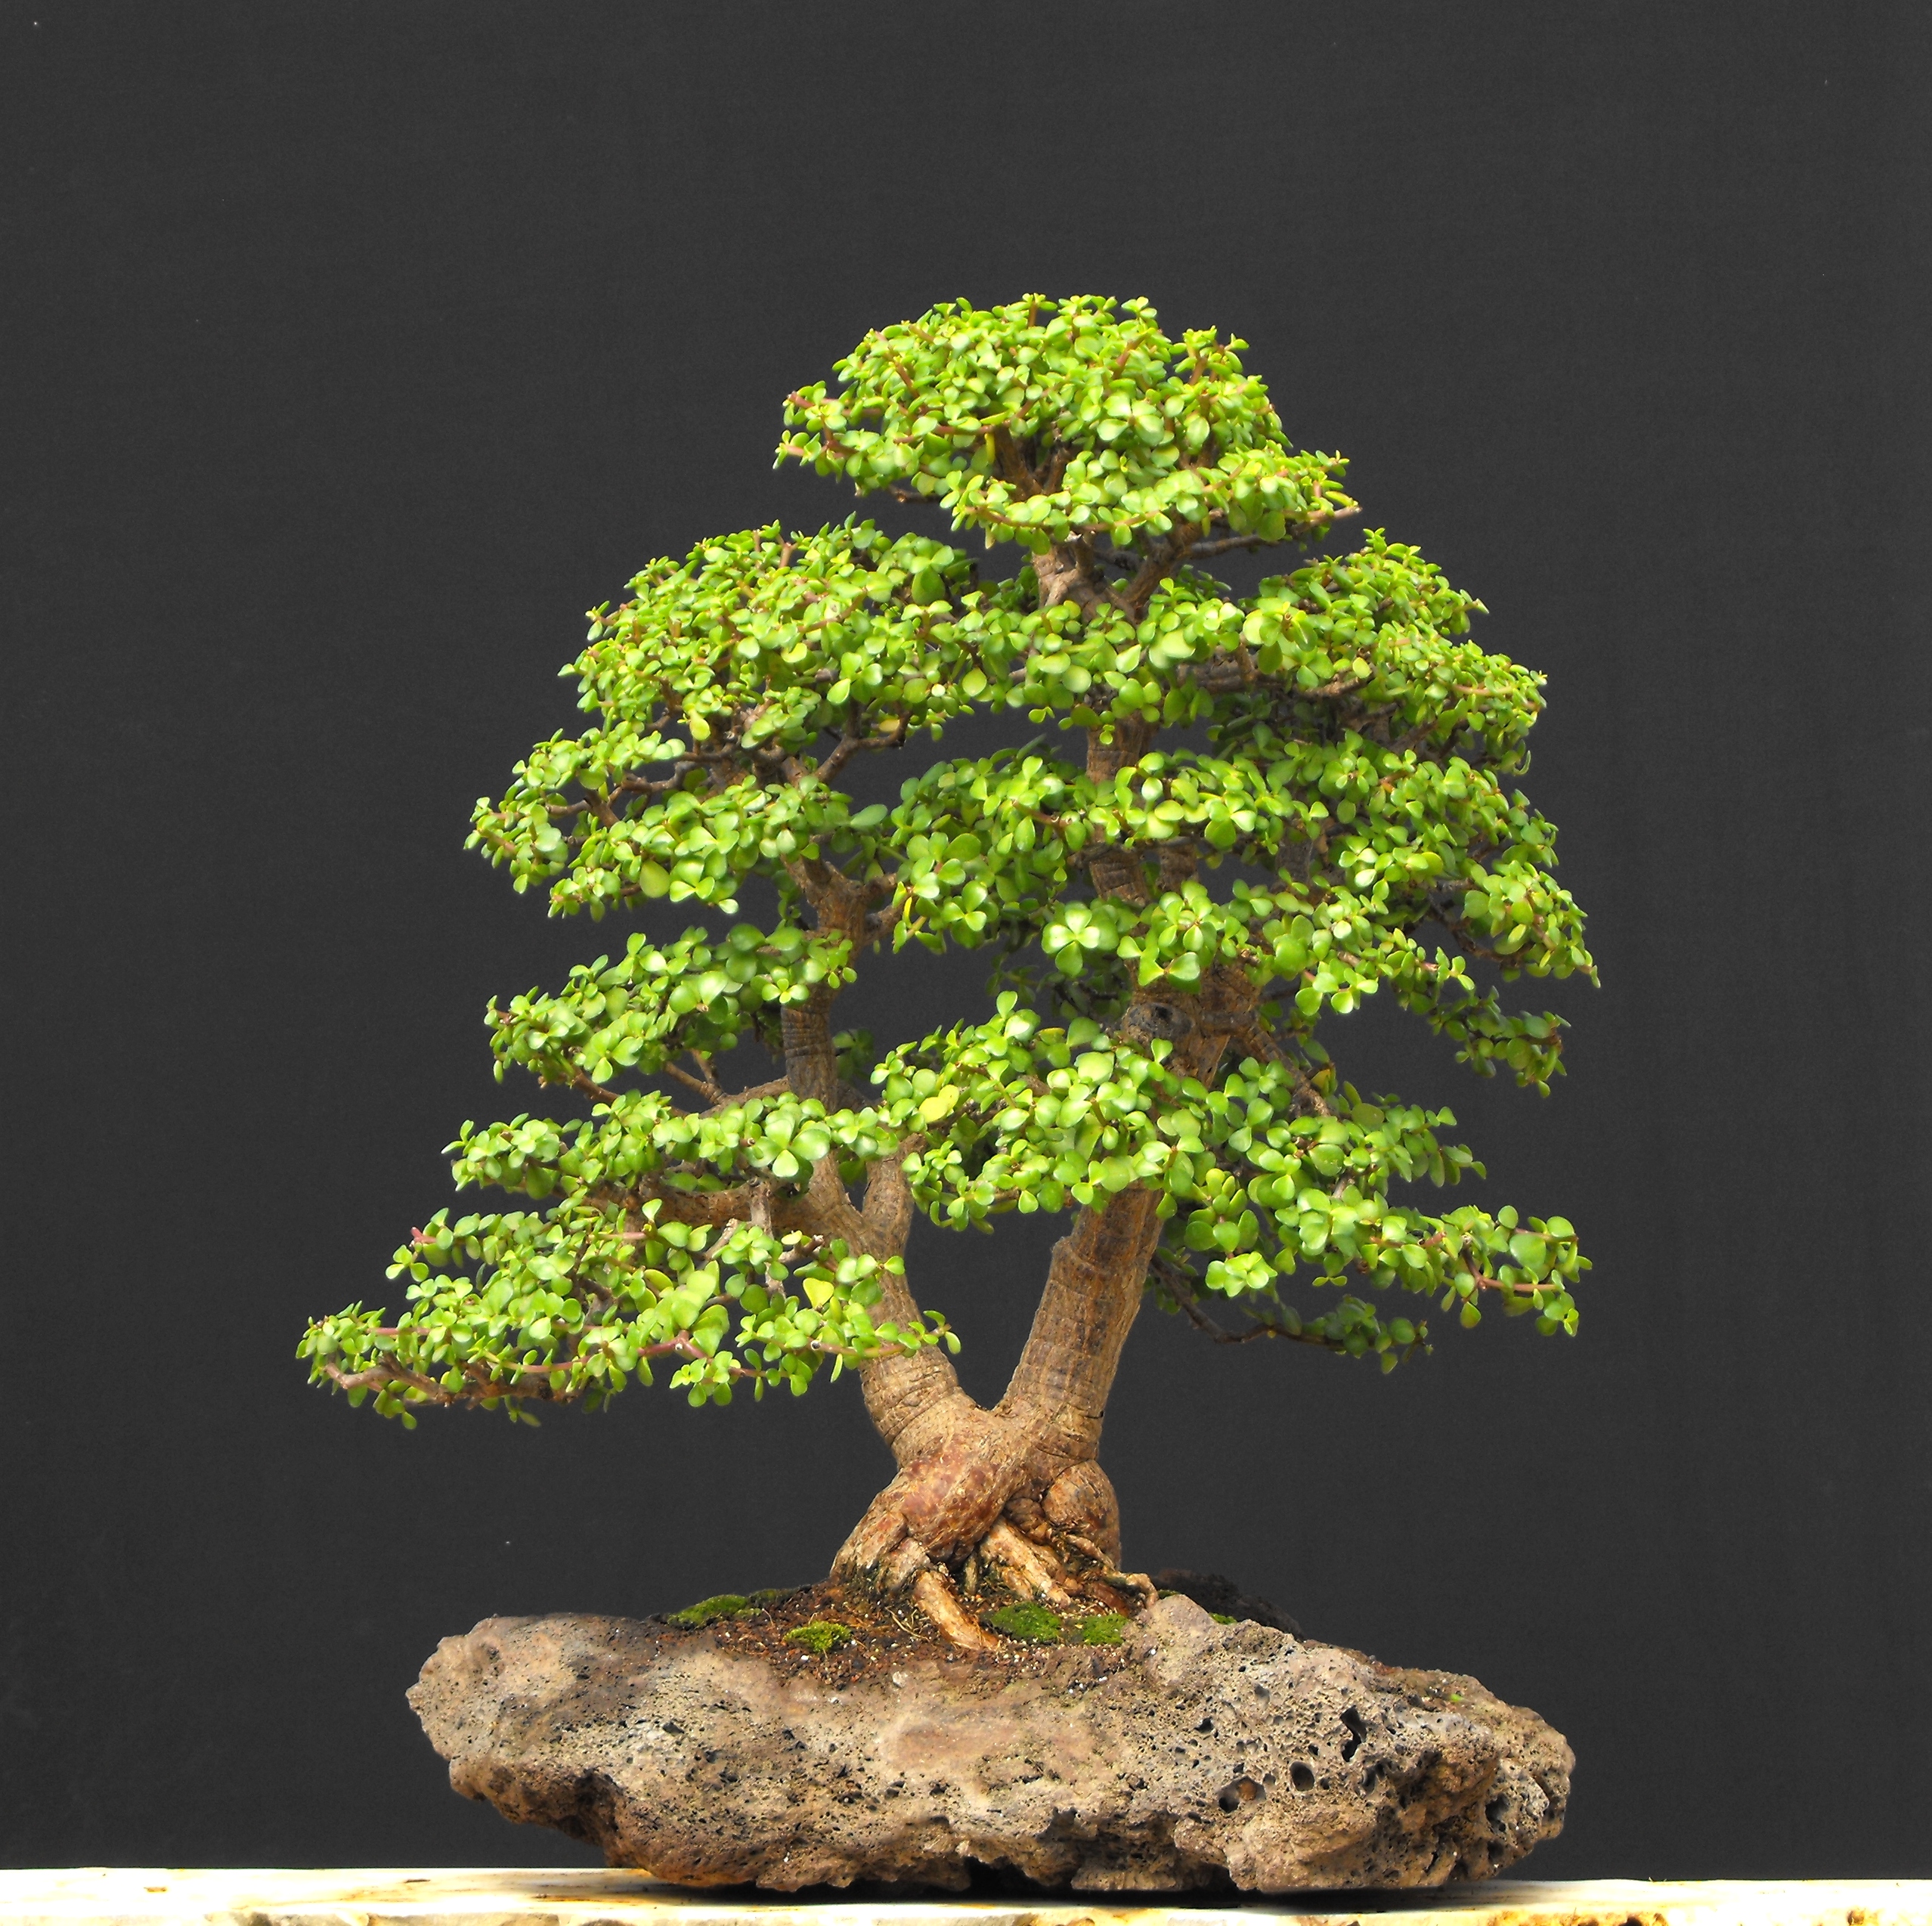 https://bonsaiwiki.files.wordpress.com/2014/05/elephants-food-bonsai.jpg